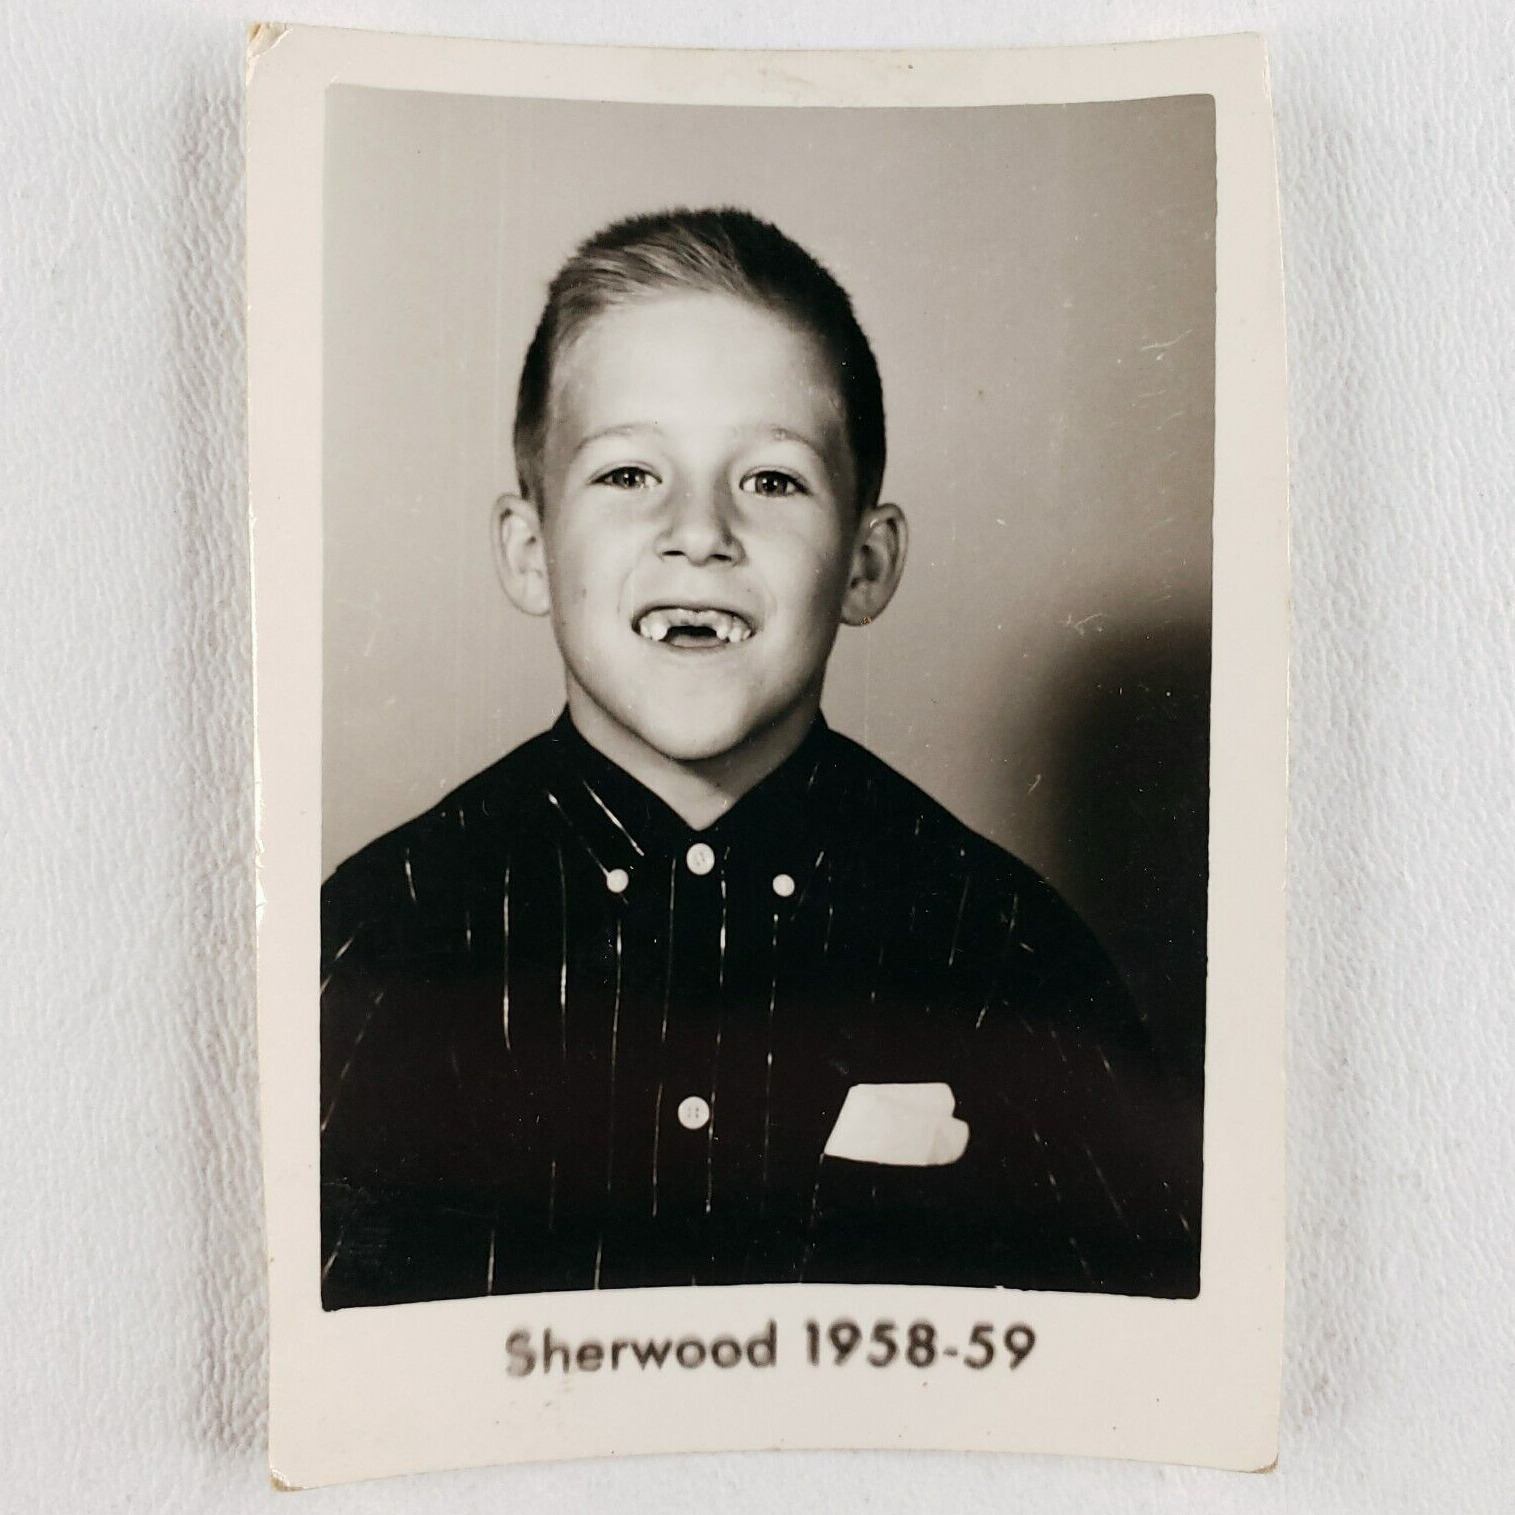 Missing Teeth Boy Class Photo 1950s Sherwood School Vintage Original Child A1277